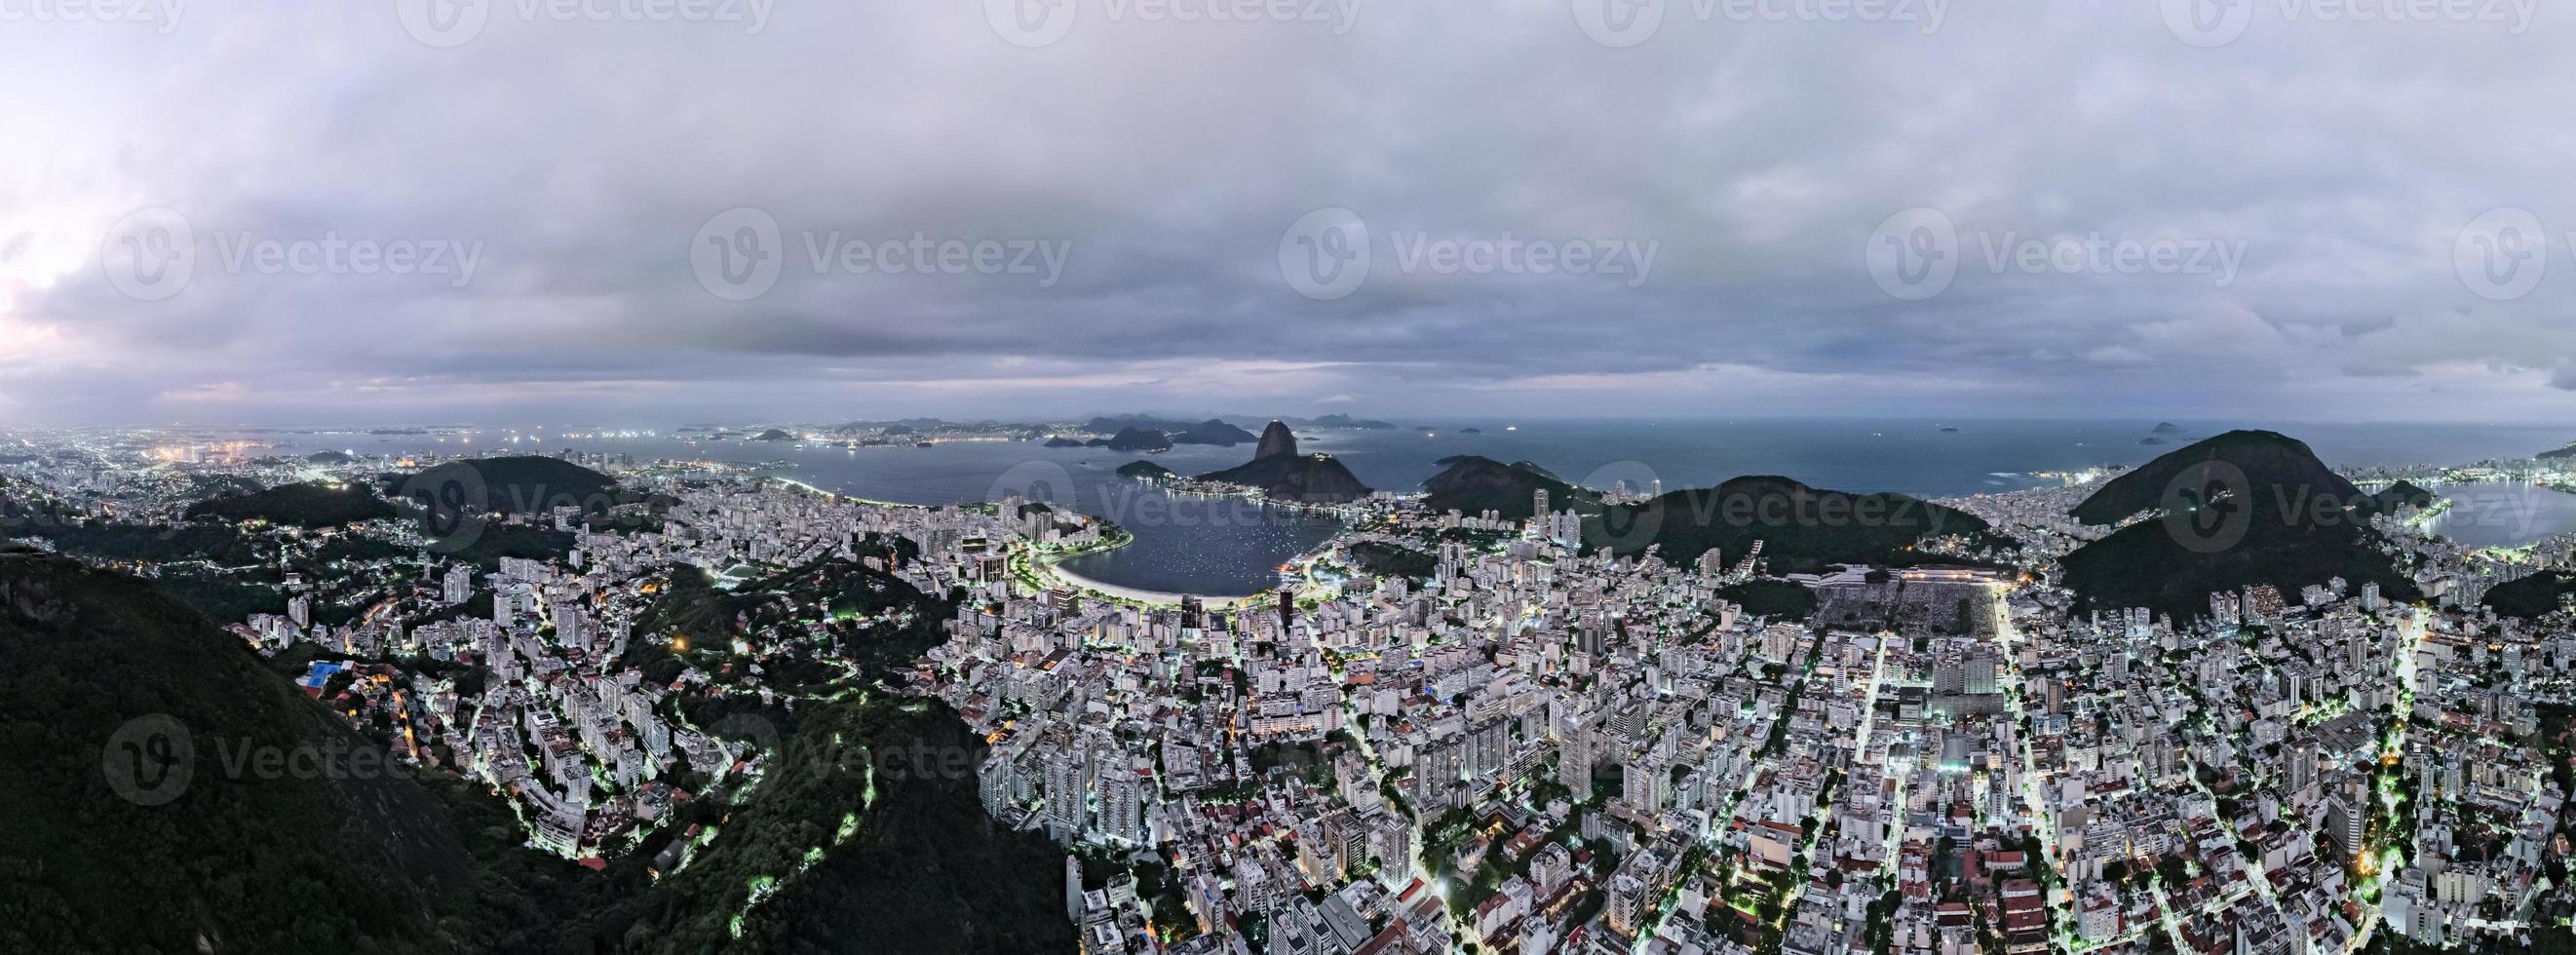 Sugarloaf mountain in Rio de Janeiro, Brazil. Botafogo buildings. Guanabara bay and Boats and ships. photo